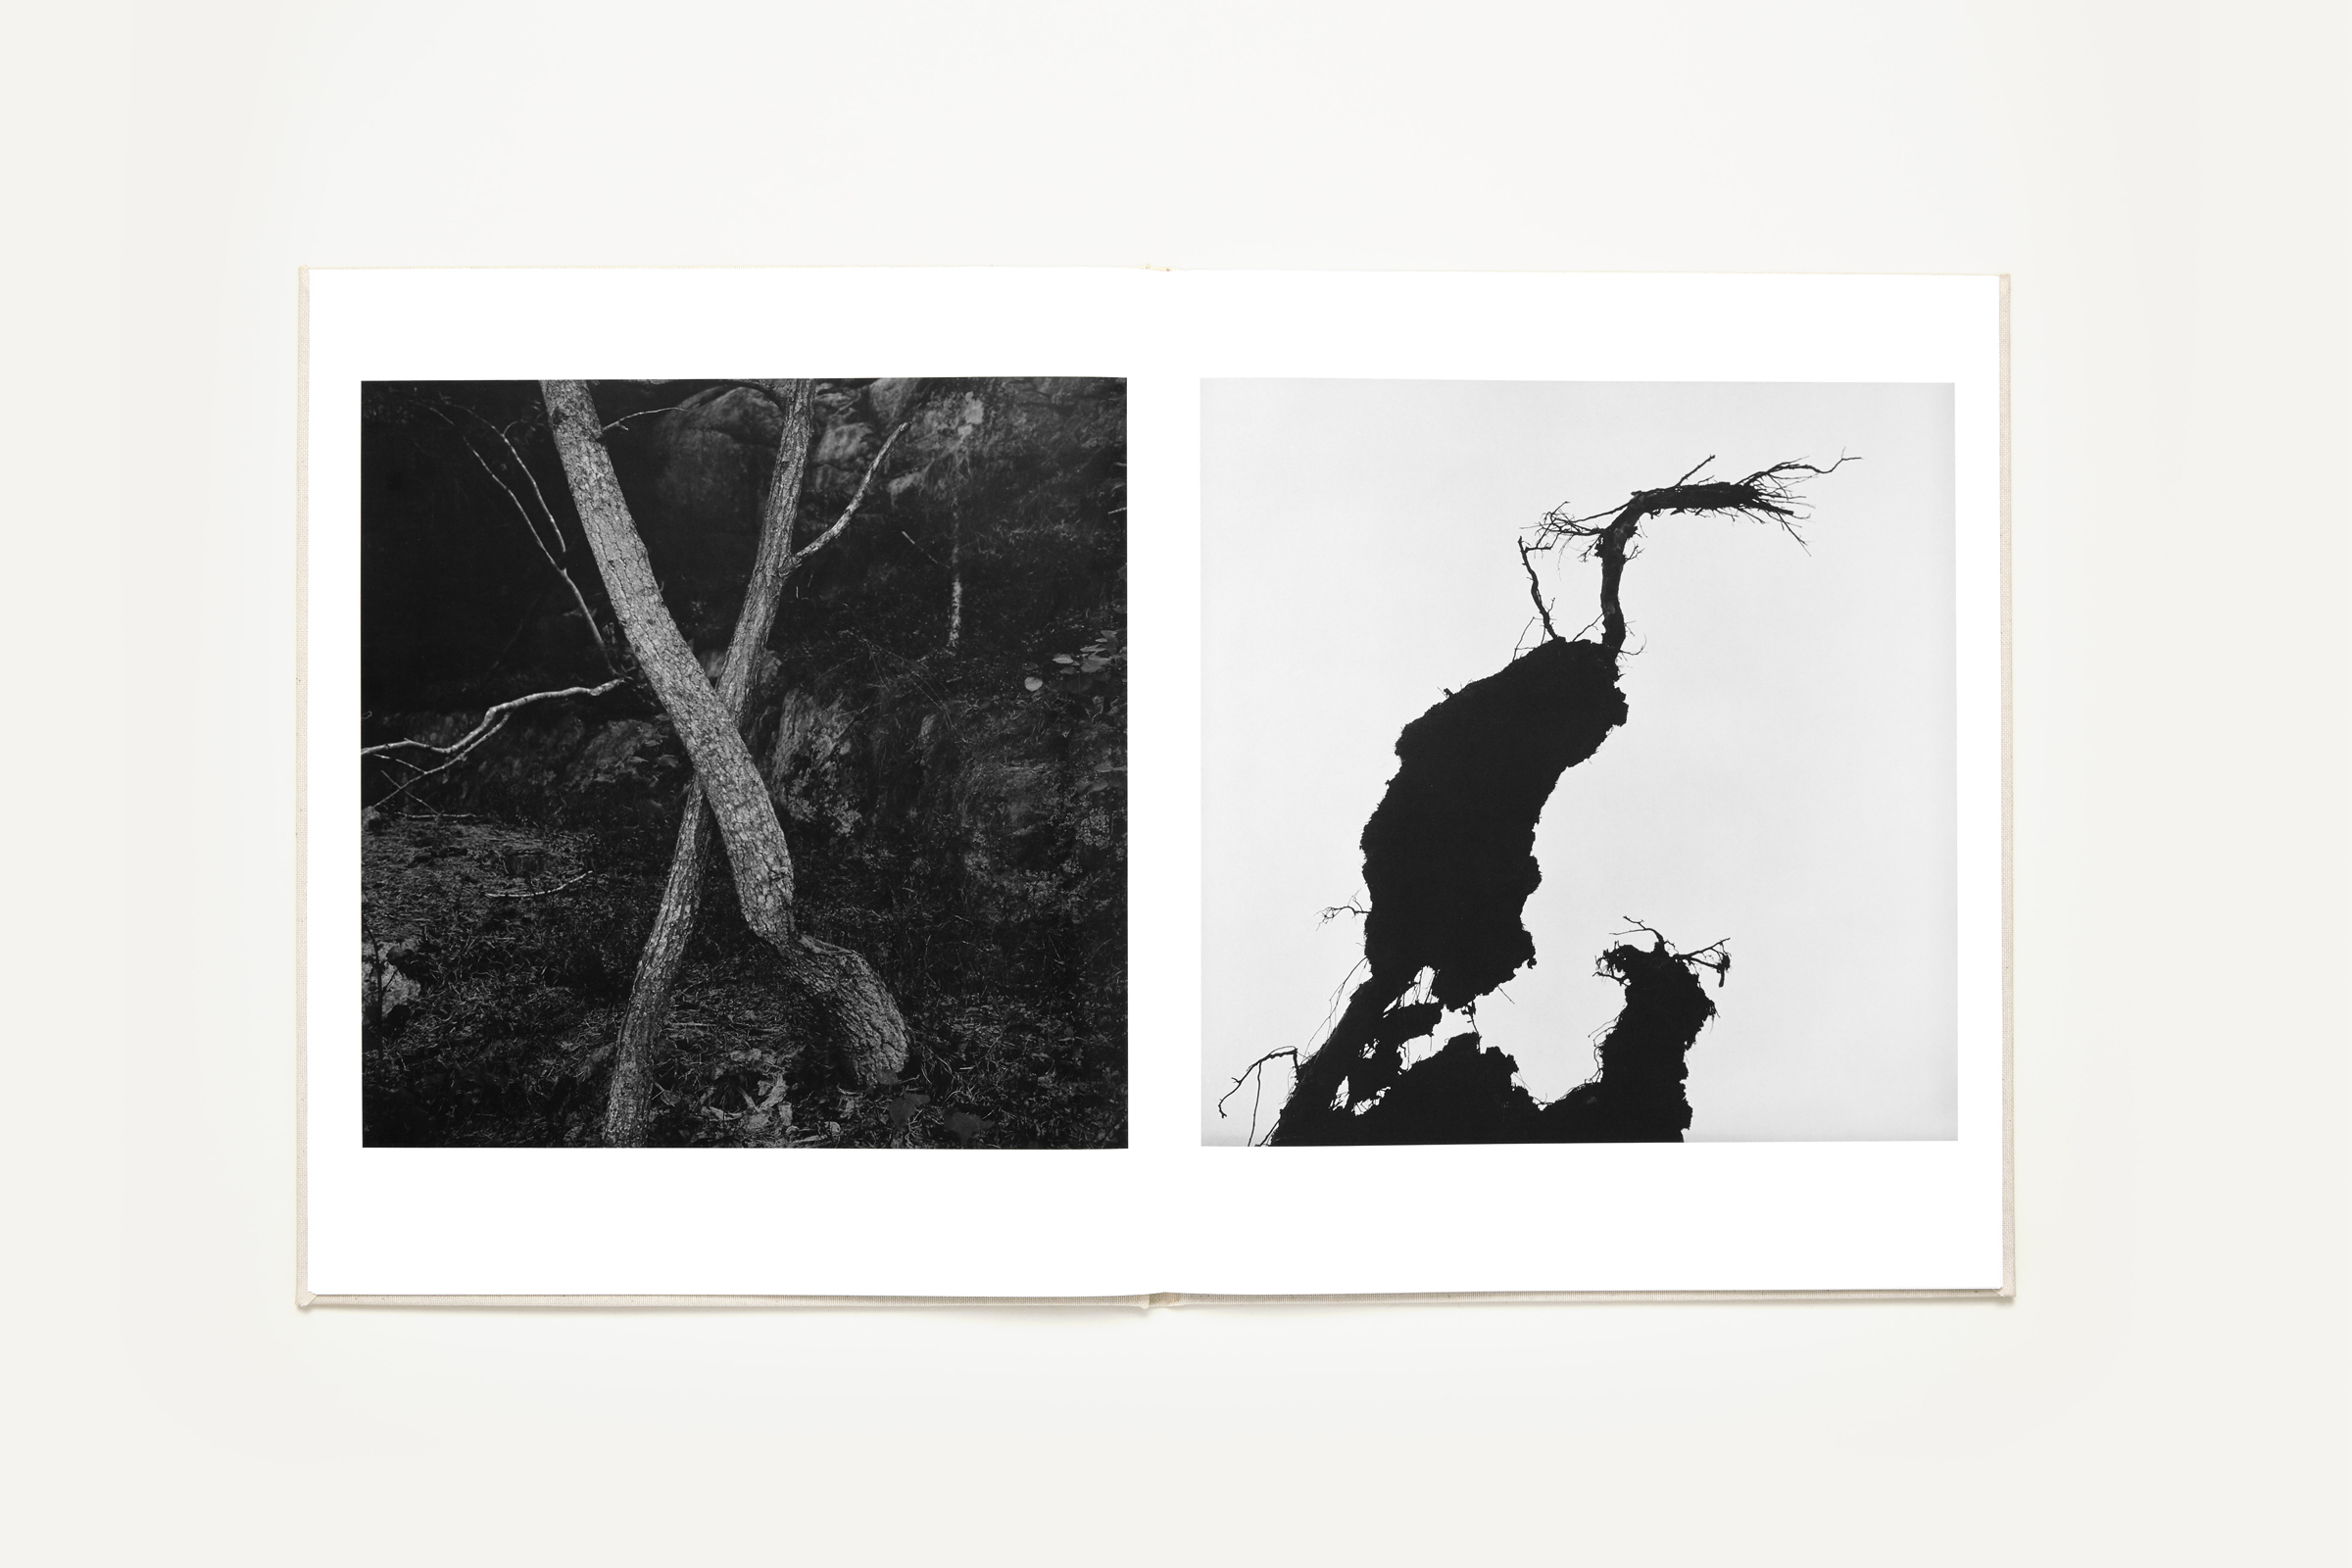 Gunnar Smoliansky — Träd — Book